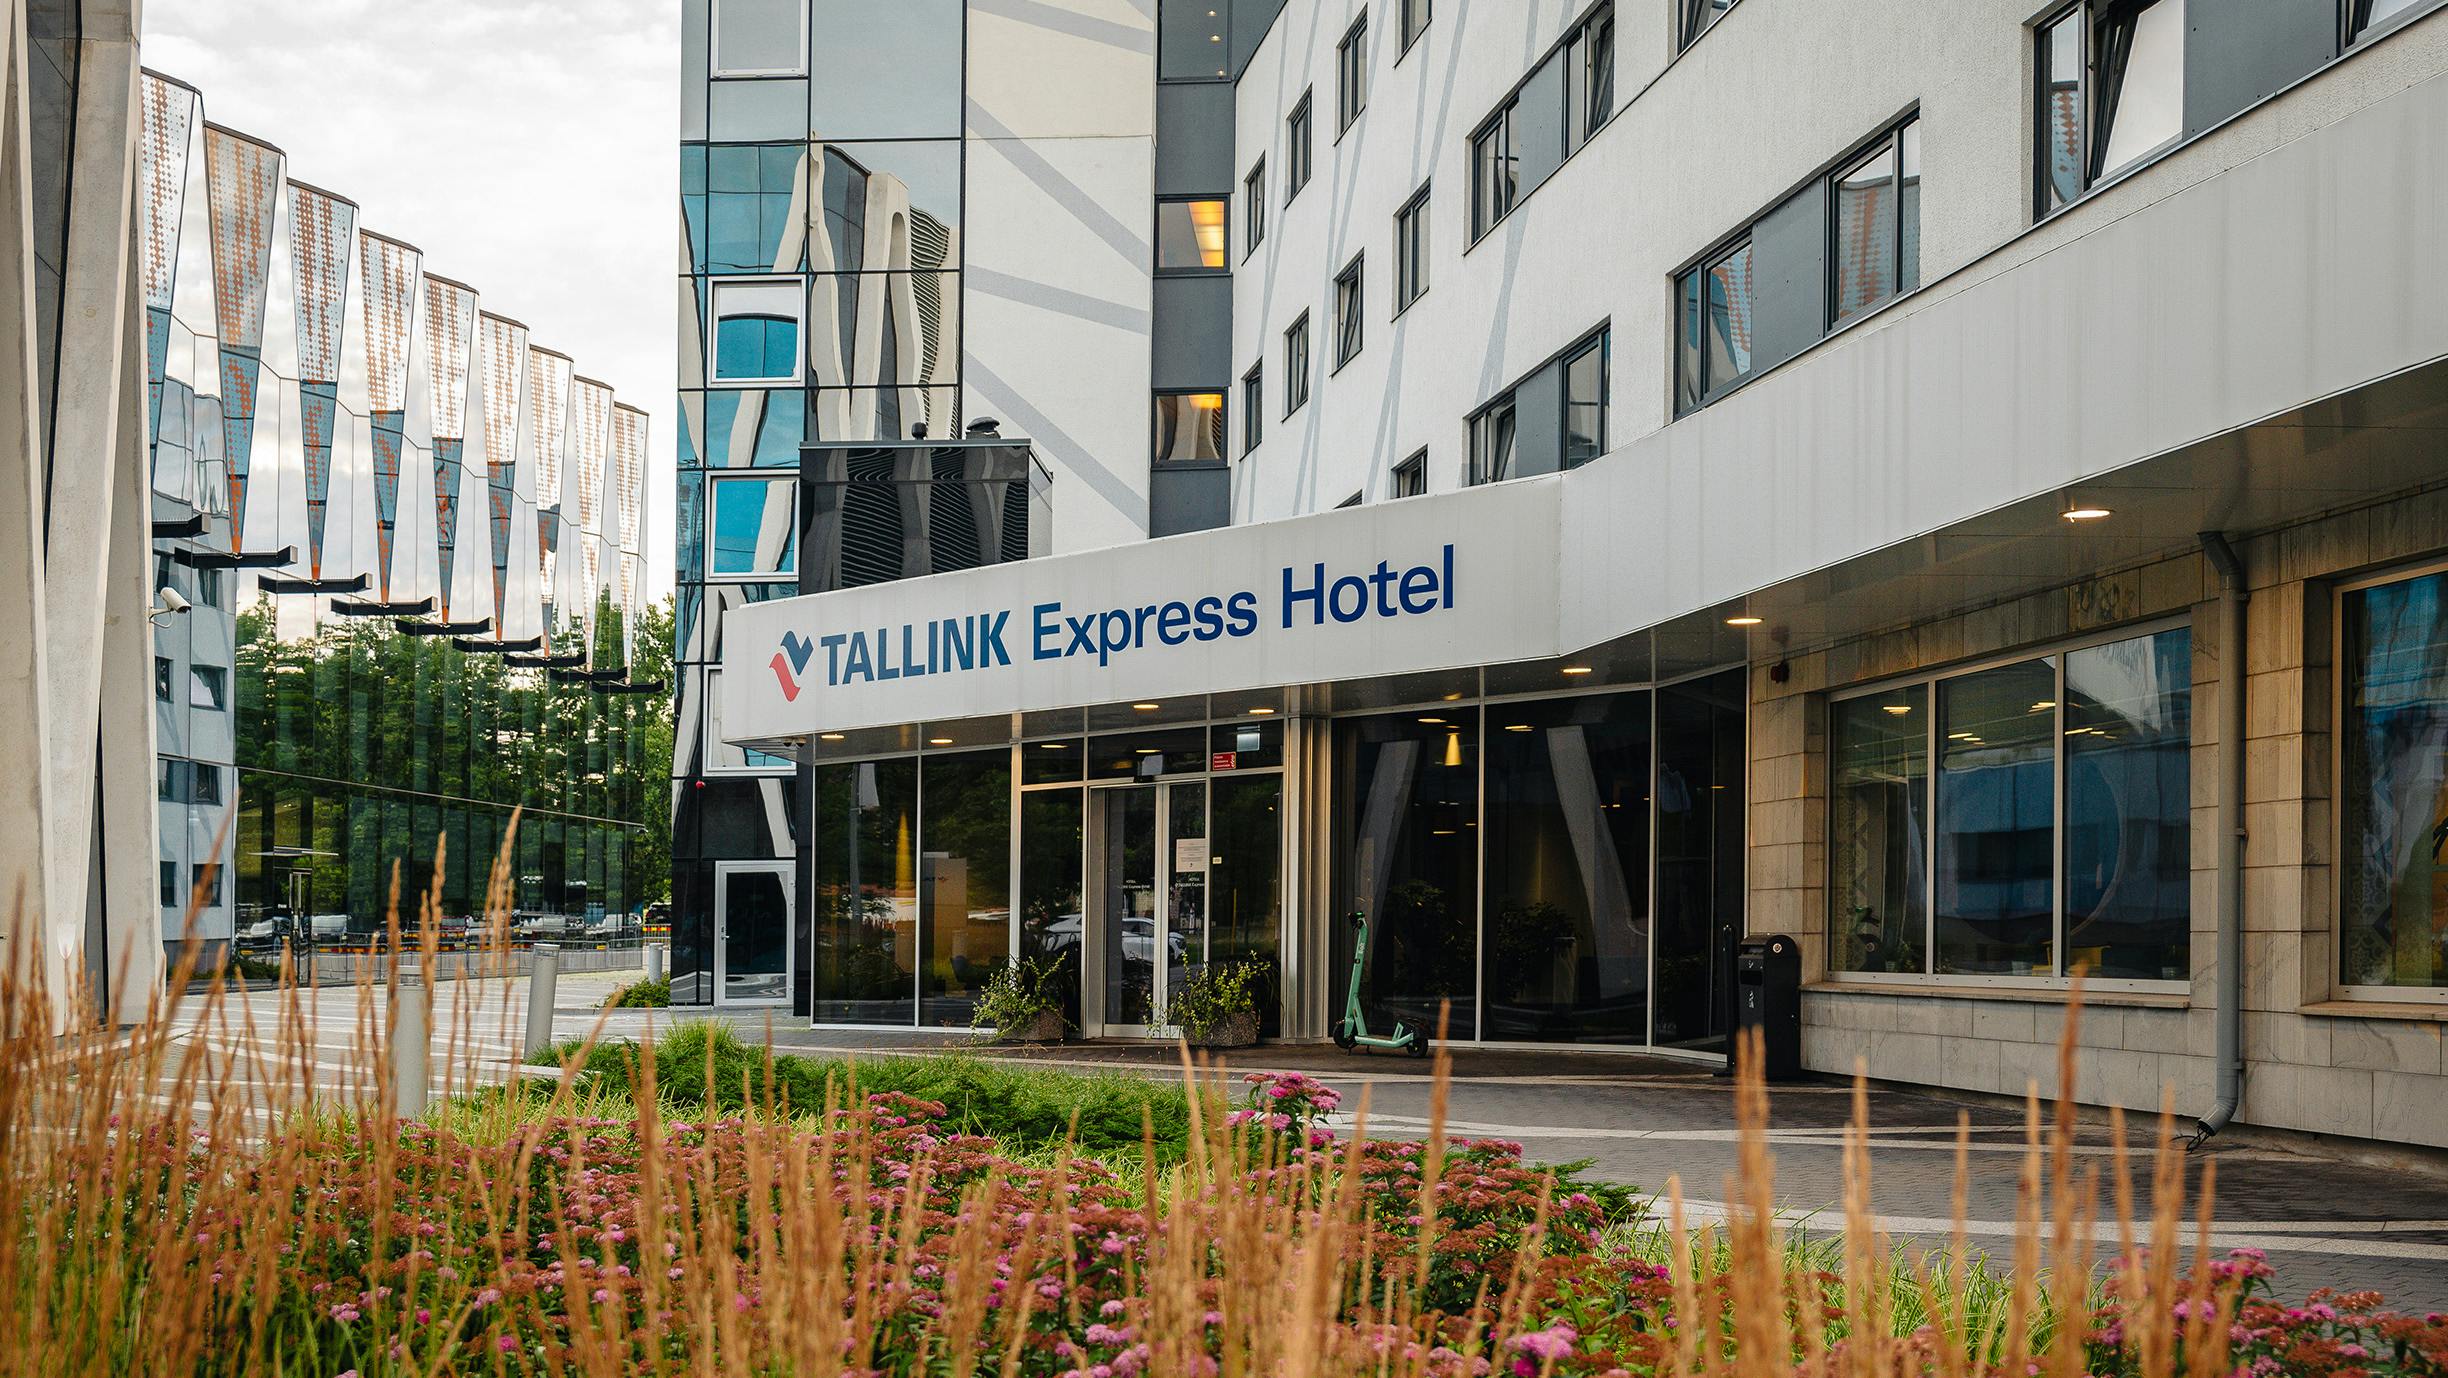 Tallink Express Hotel exterior view